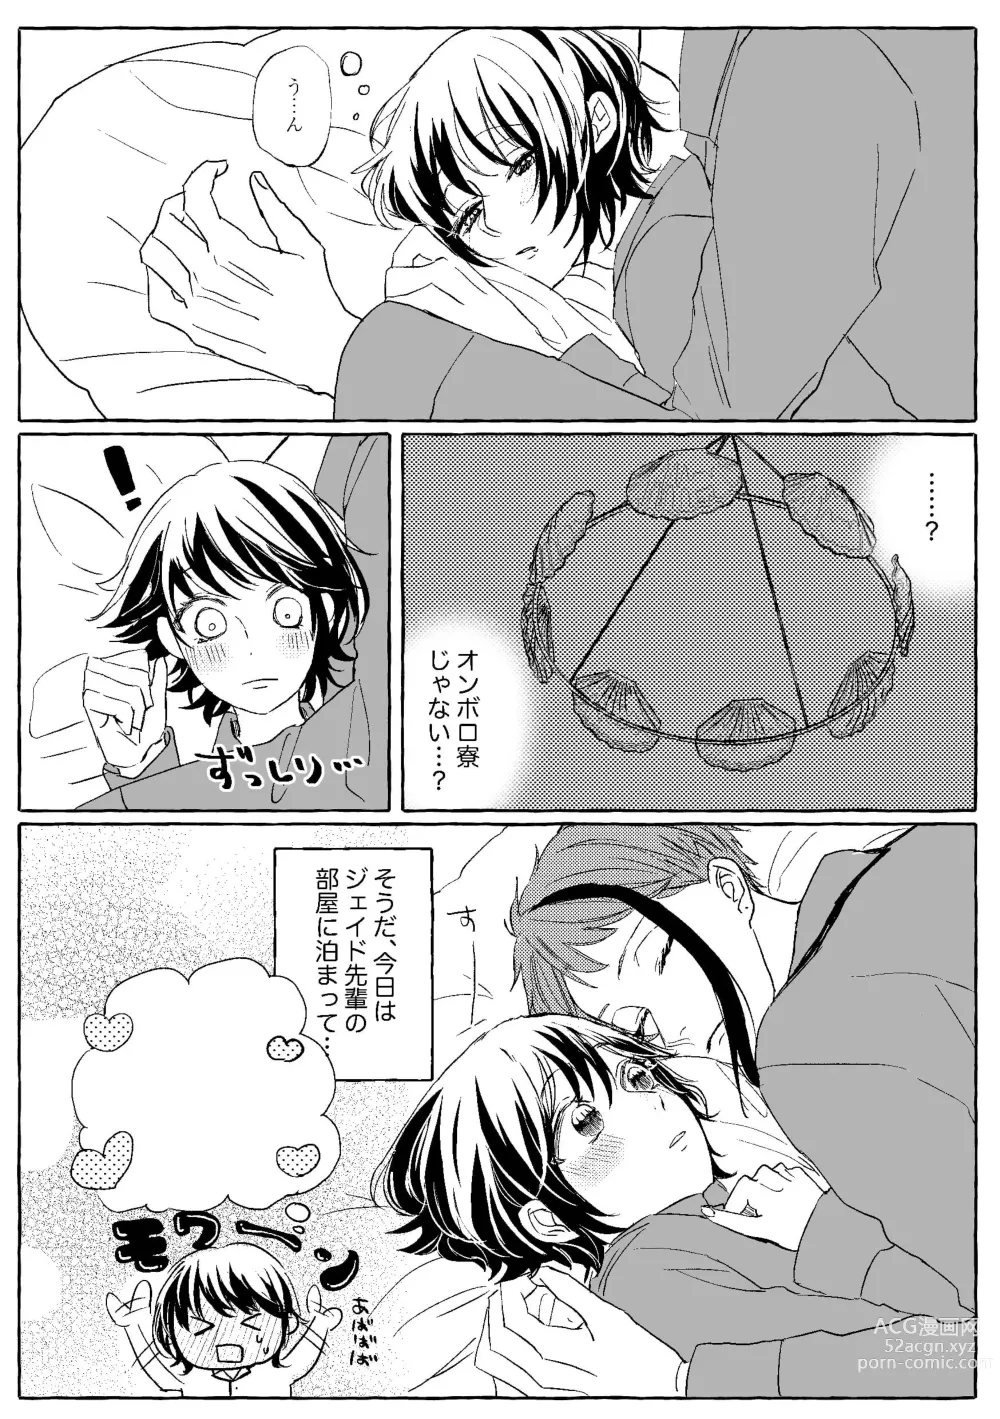 Page 131 of doujinshi Teenage Dream